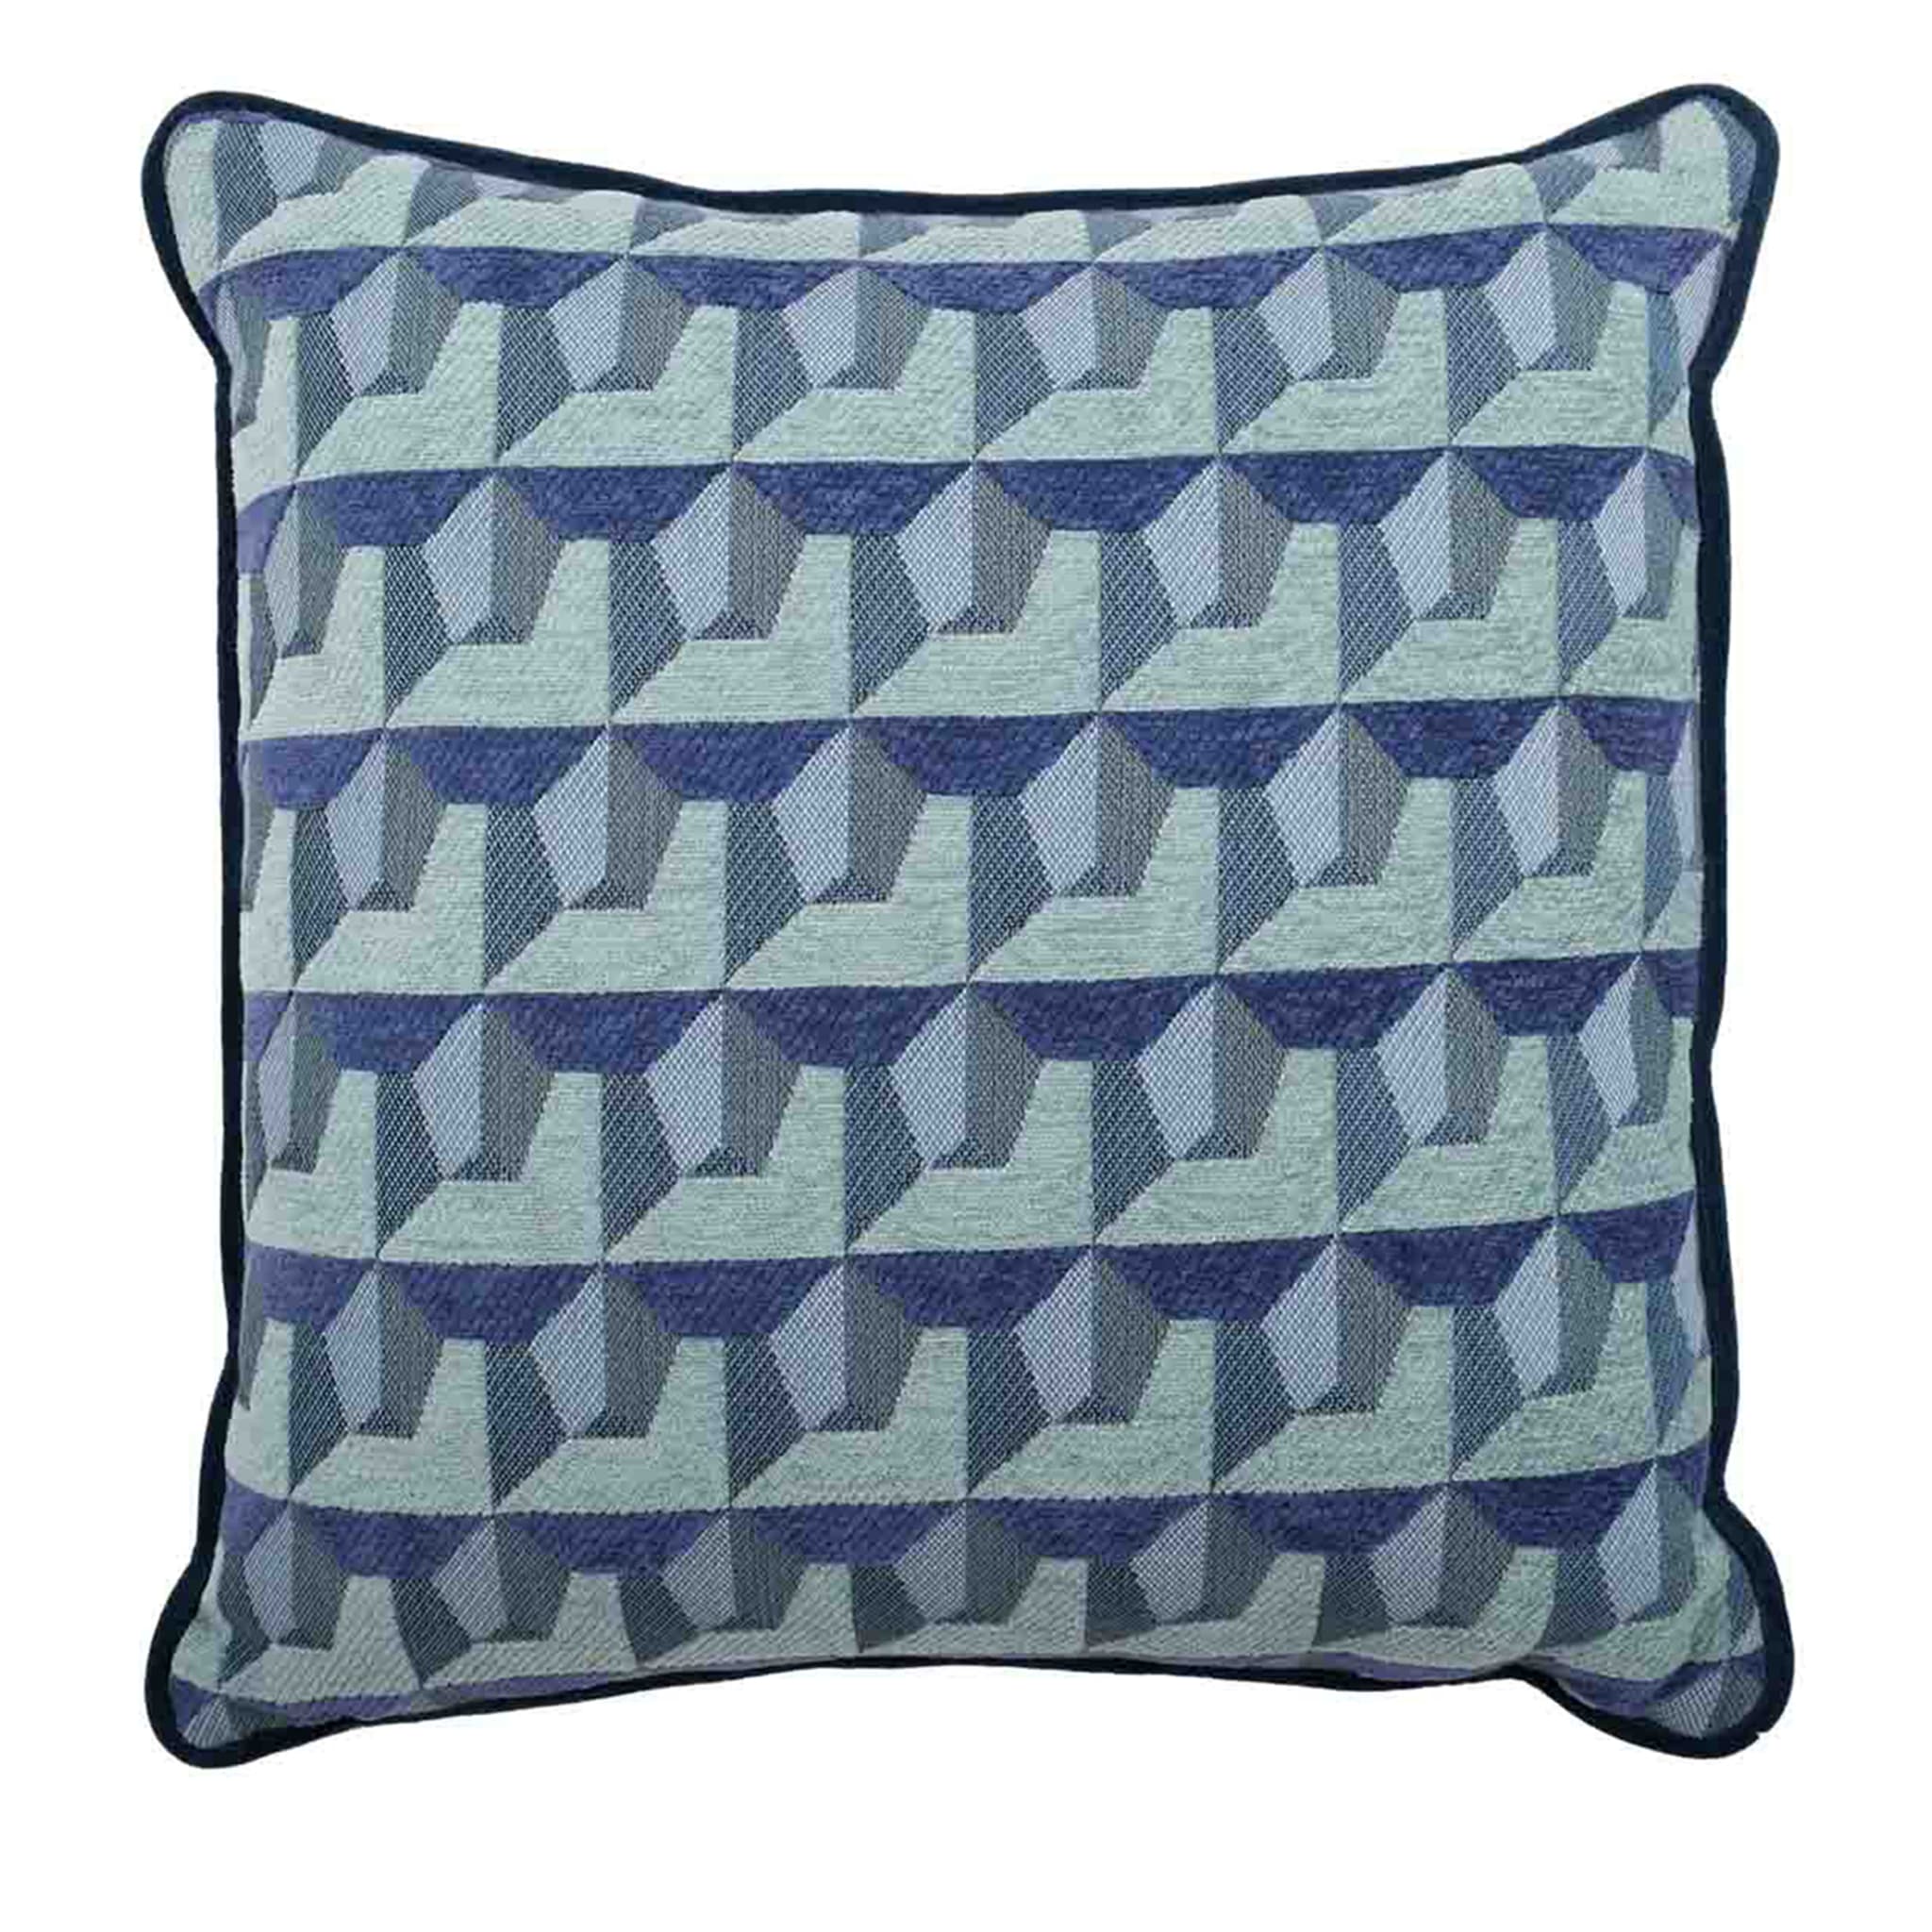 Blue Carrè Cushion in geometric jacquard fabric - Main view